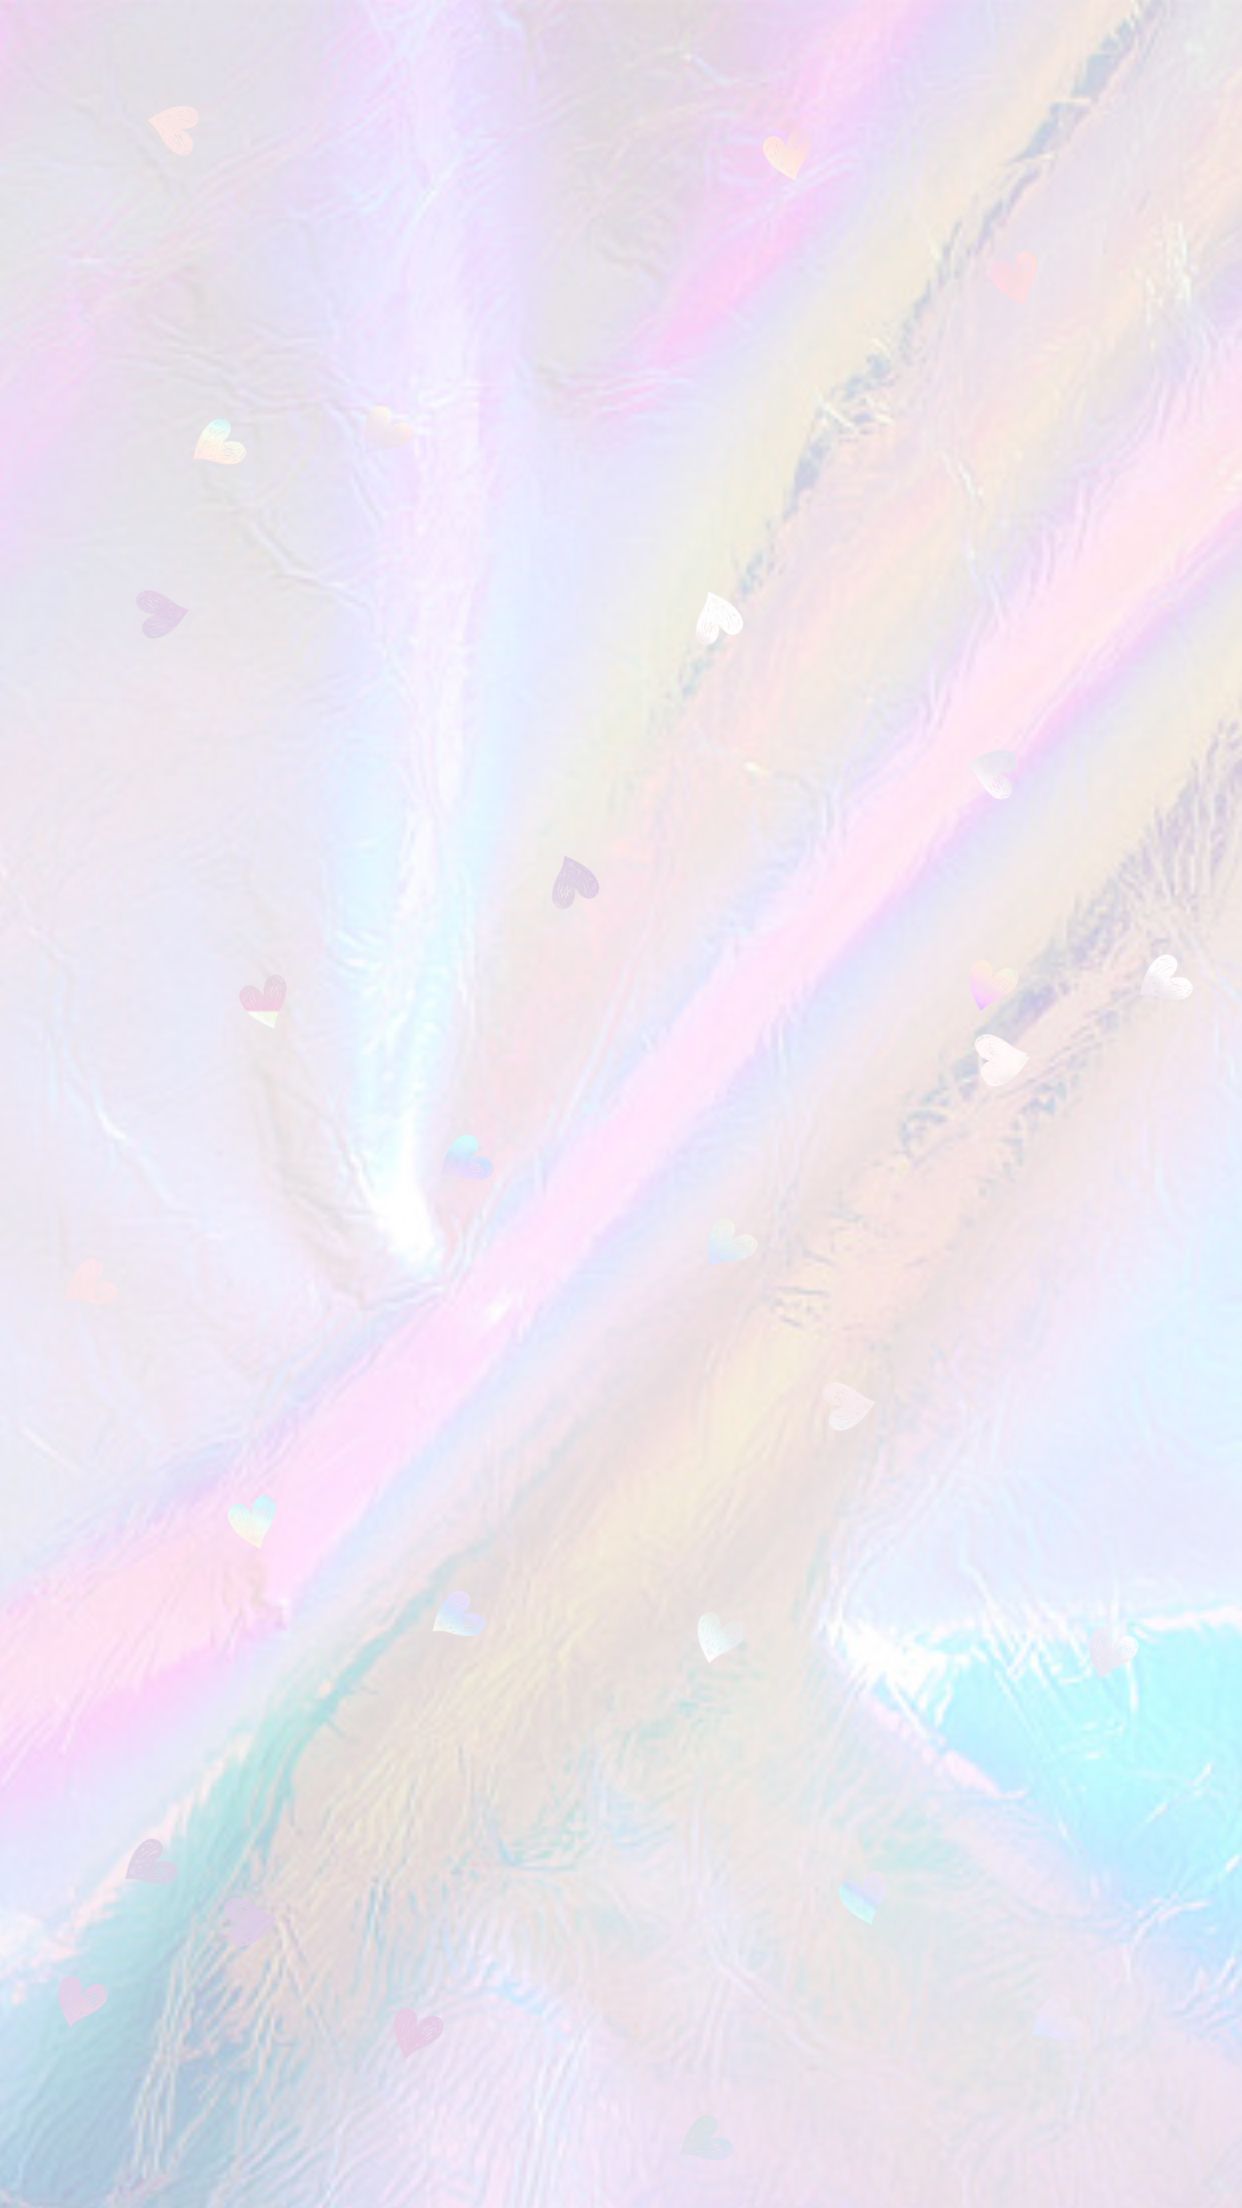 Blurred Hologram Texture Gradient Wallpaper Lucent Vector có sẵn miễn phí  bản quyền 1589124514  Shutterstock